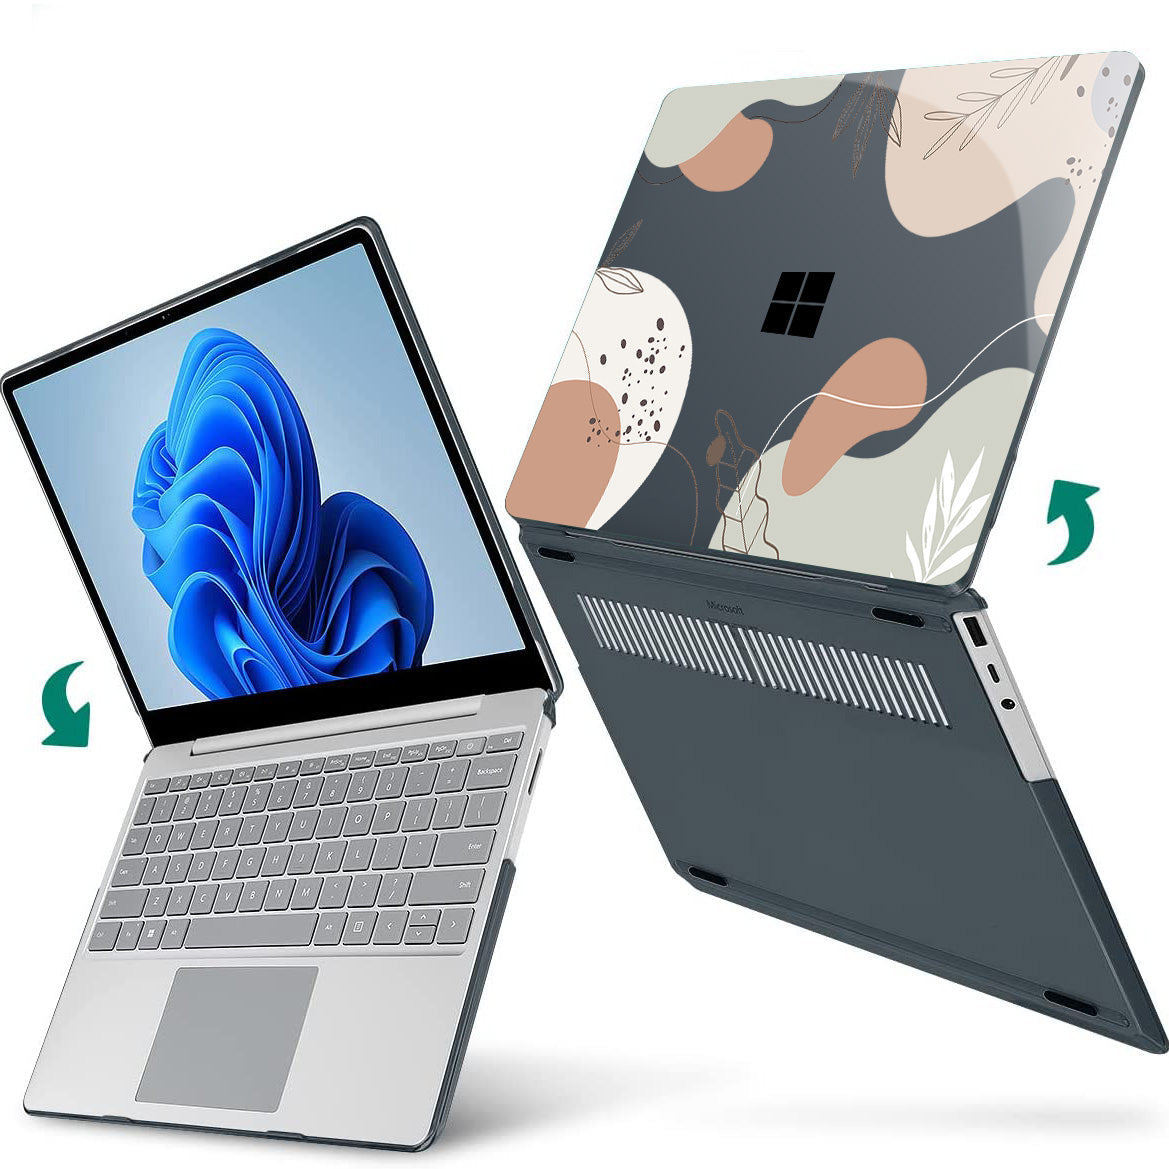 Morandi Leaves Microsoft Surface Laptop Case